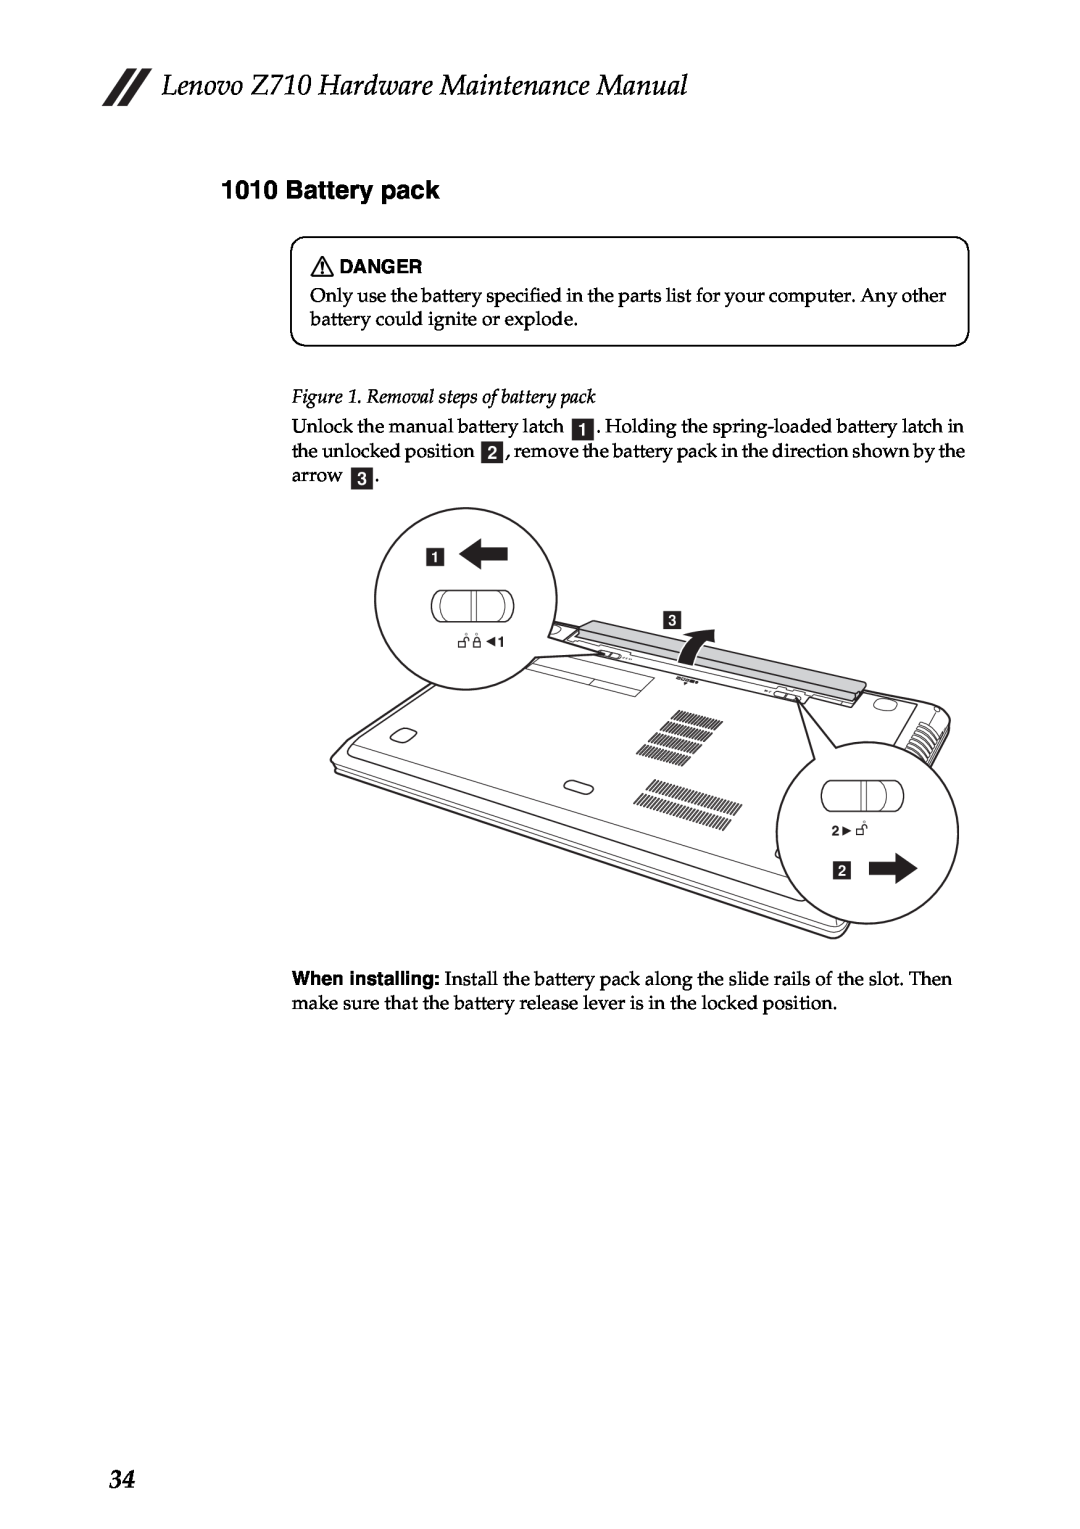 Lenovo manual Battery pack, Removal steps of battery pack, Lenovo Z710 Hardware Maintenance Manual 